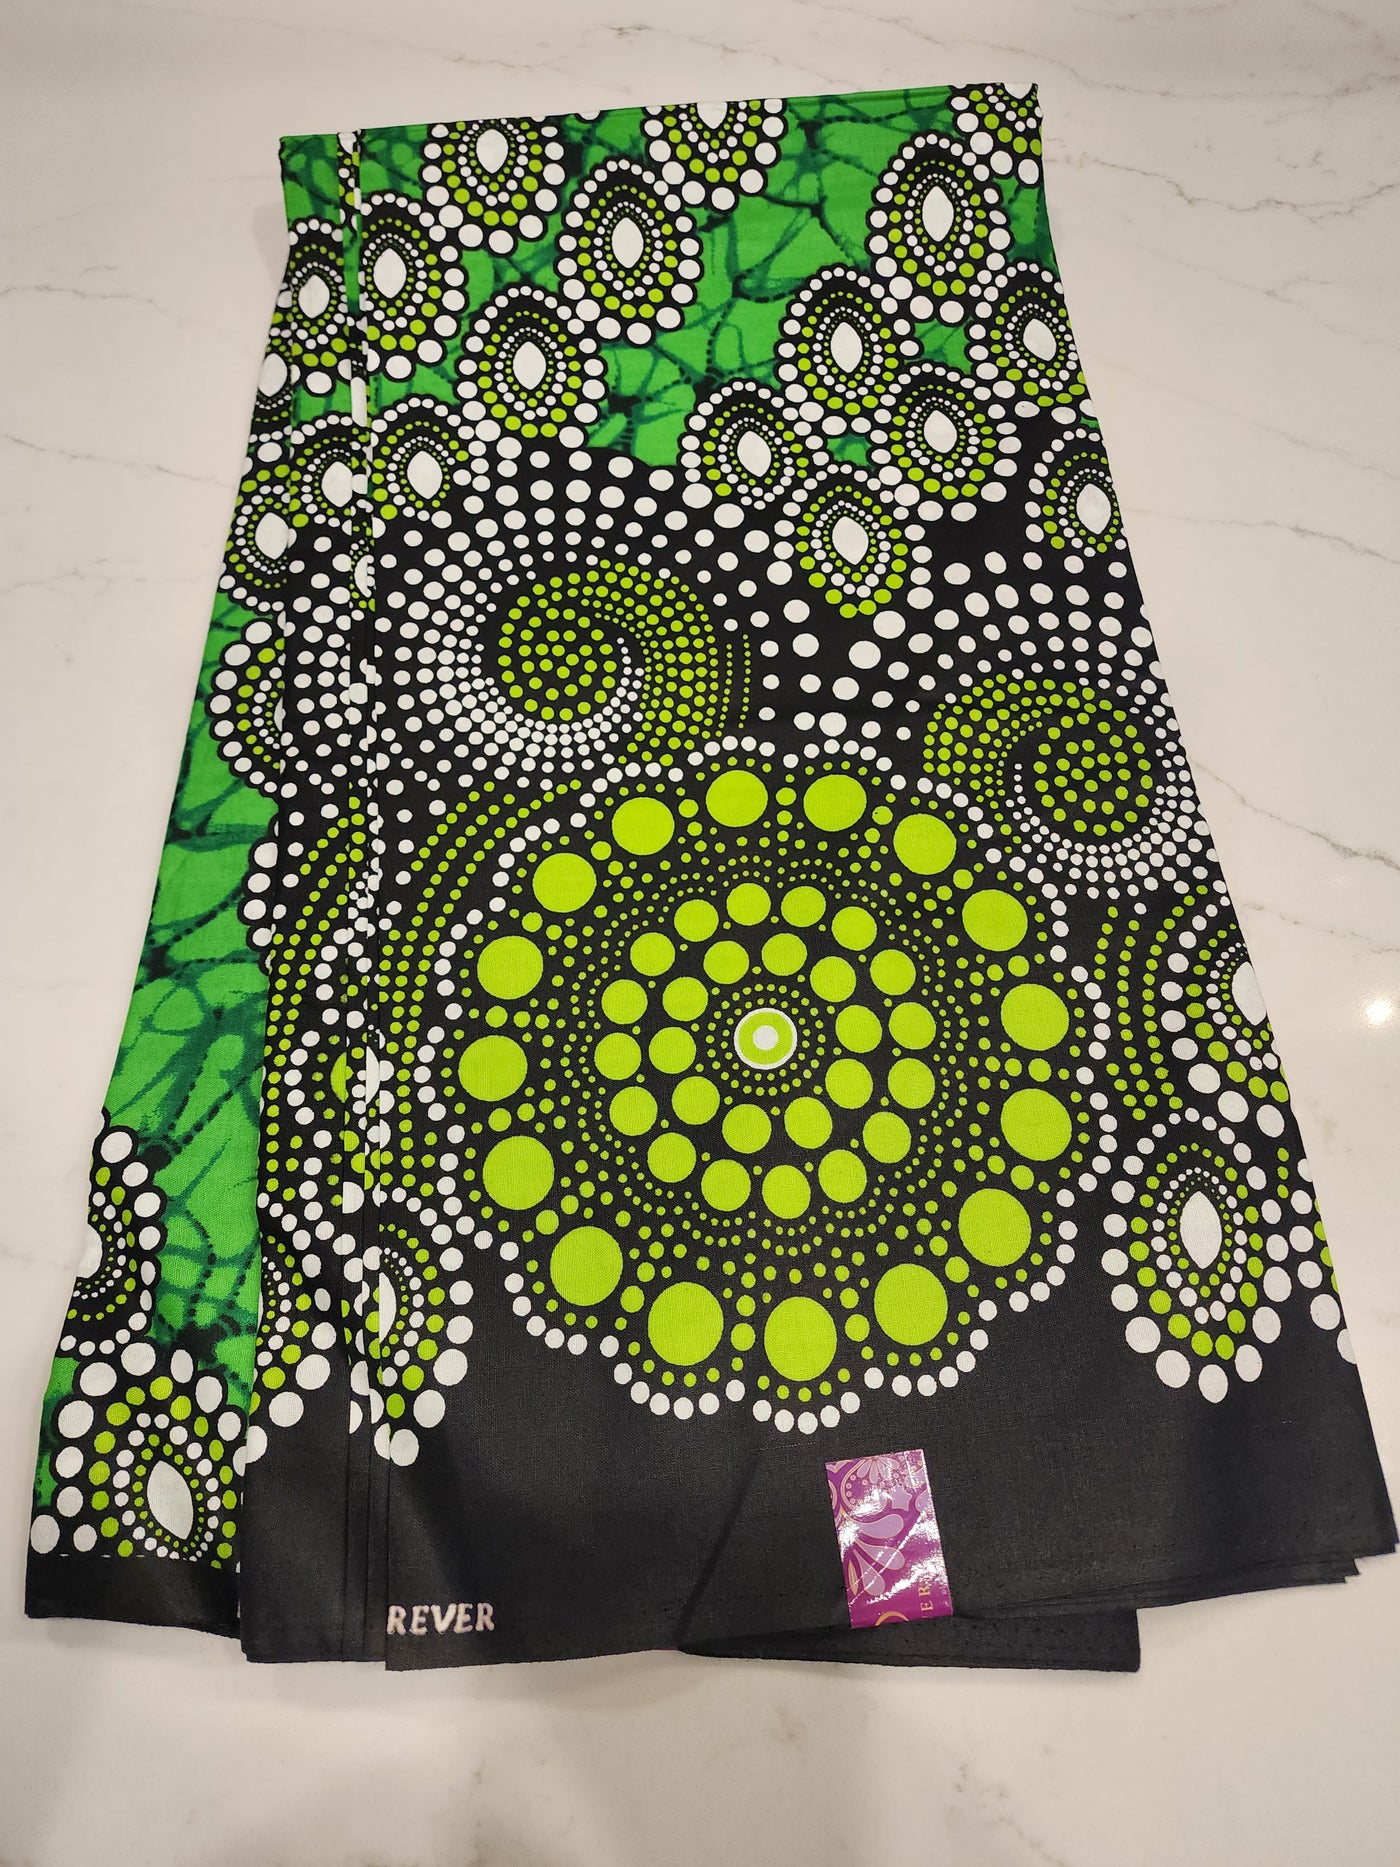 Green African Ankara Fabric